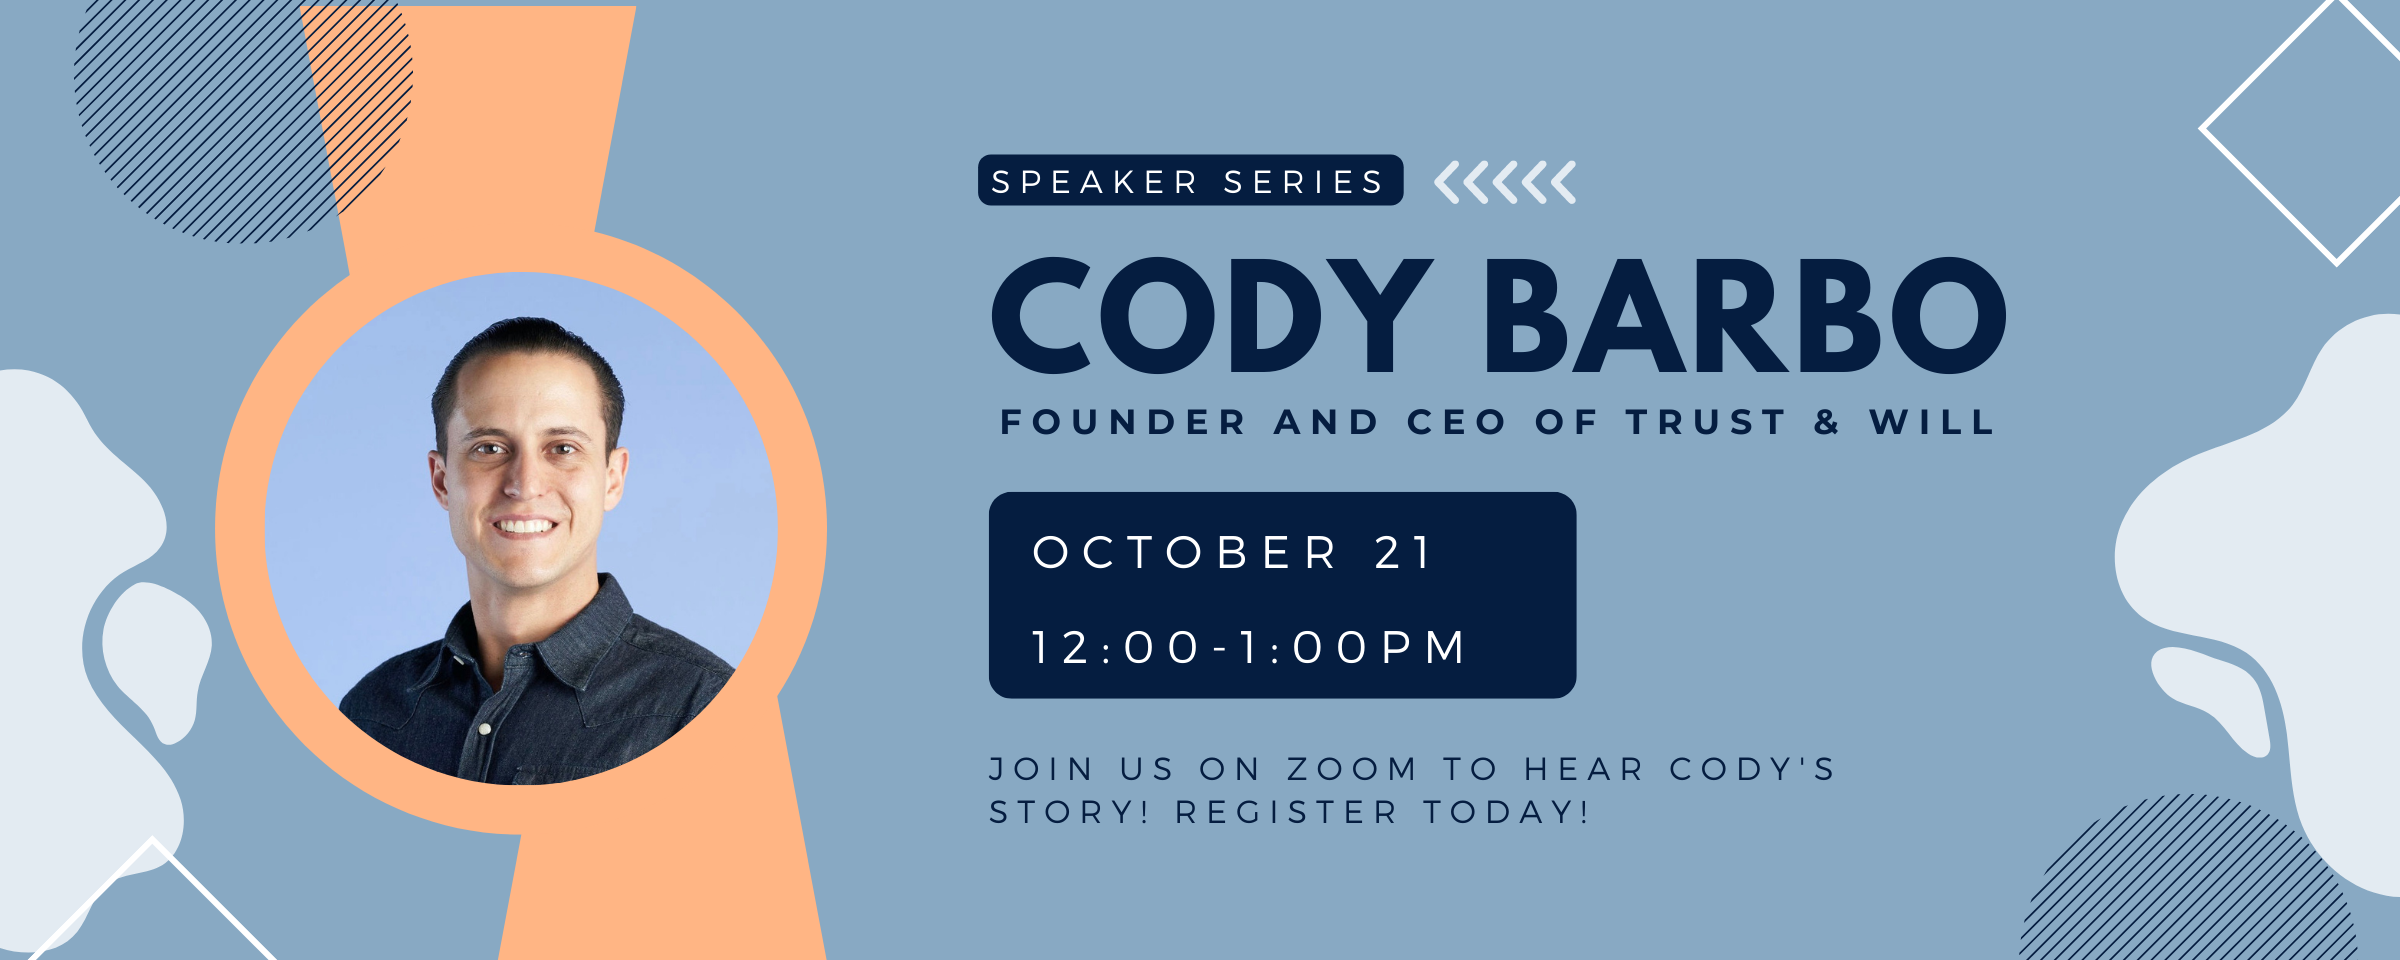 Cody Barbo Speaker Series